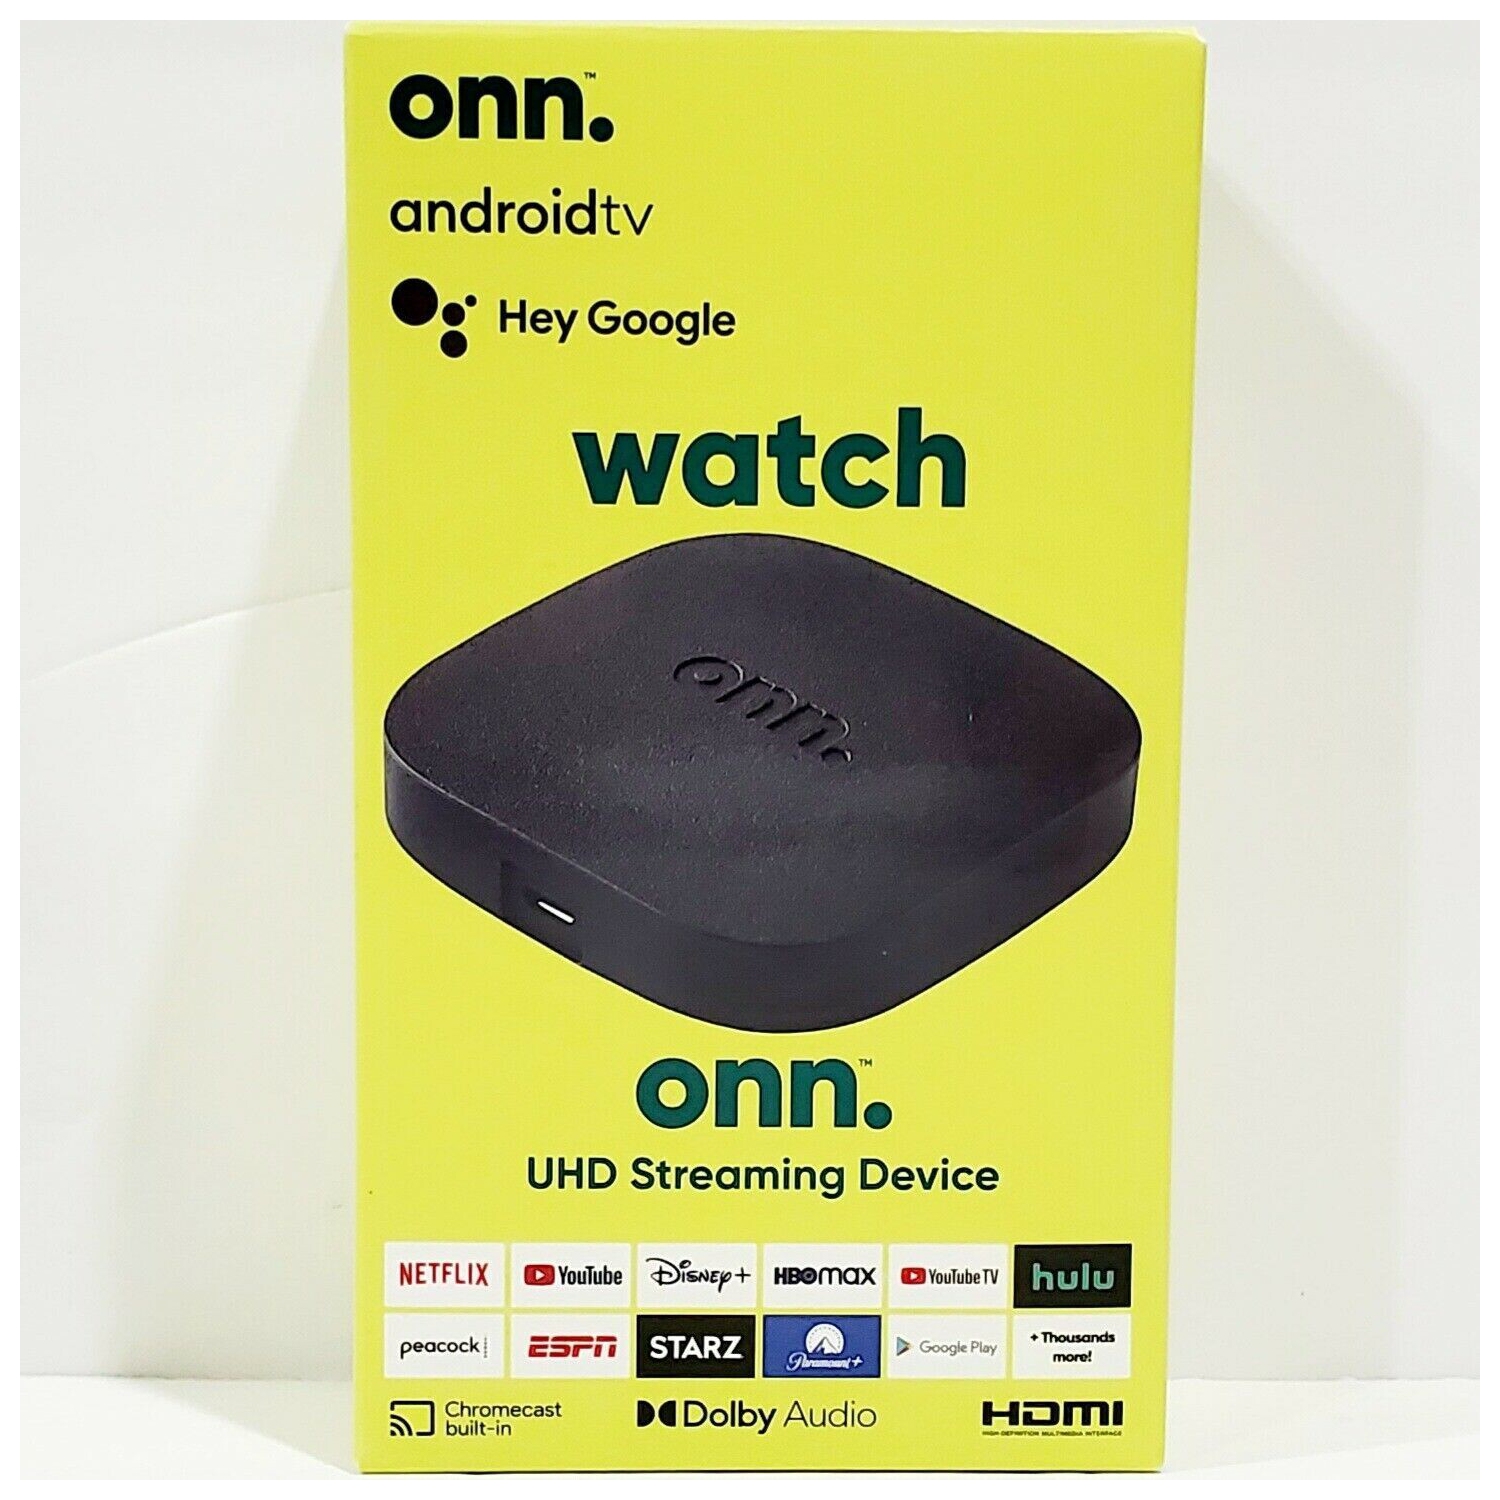 ONN. Android TV UHD Streaming Box - Black